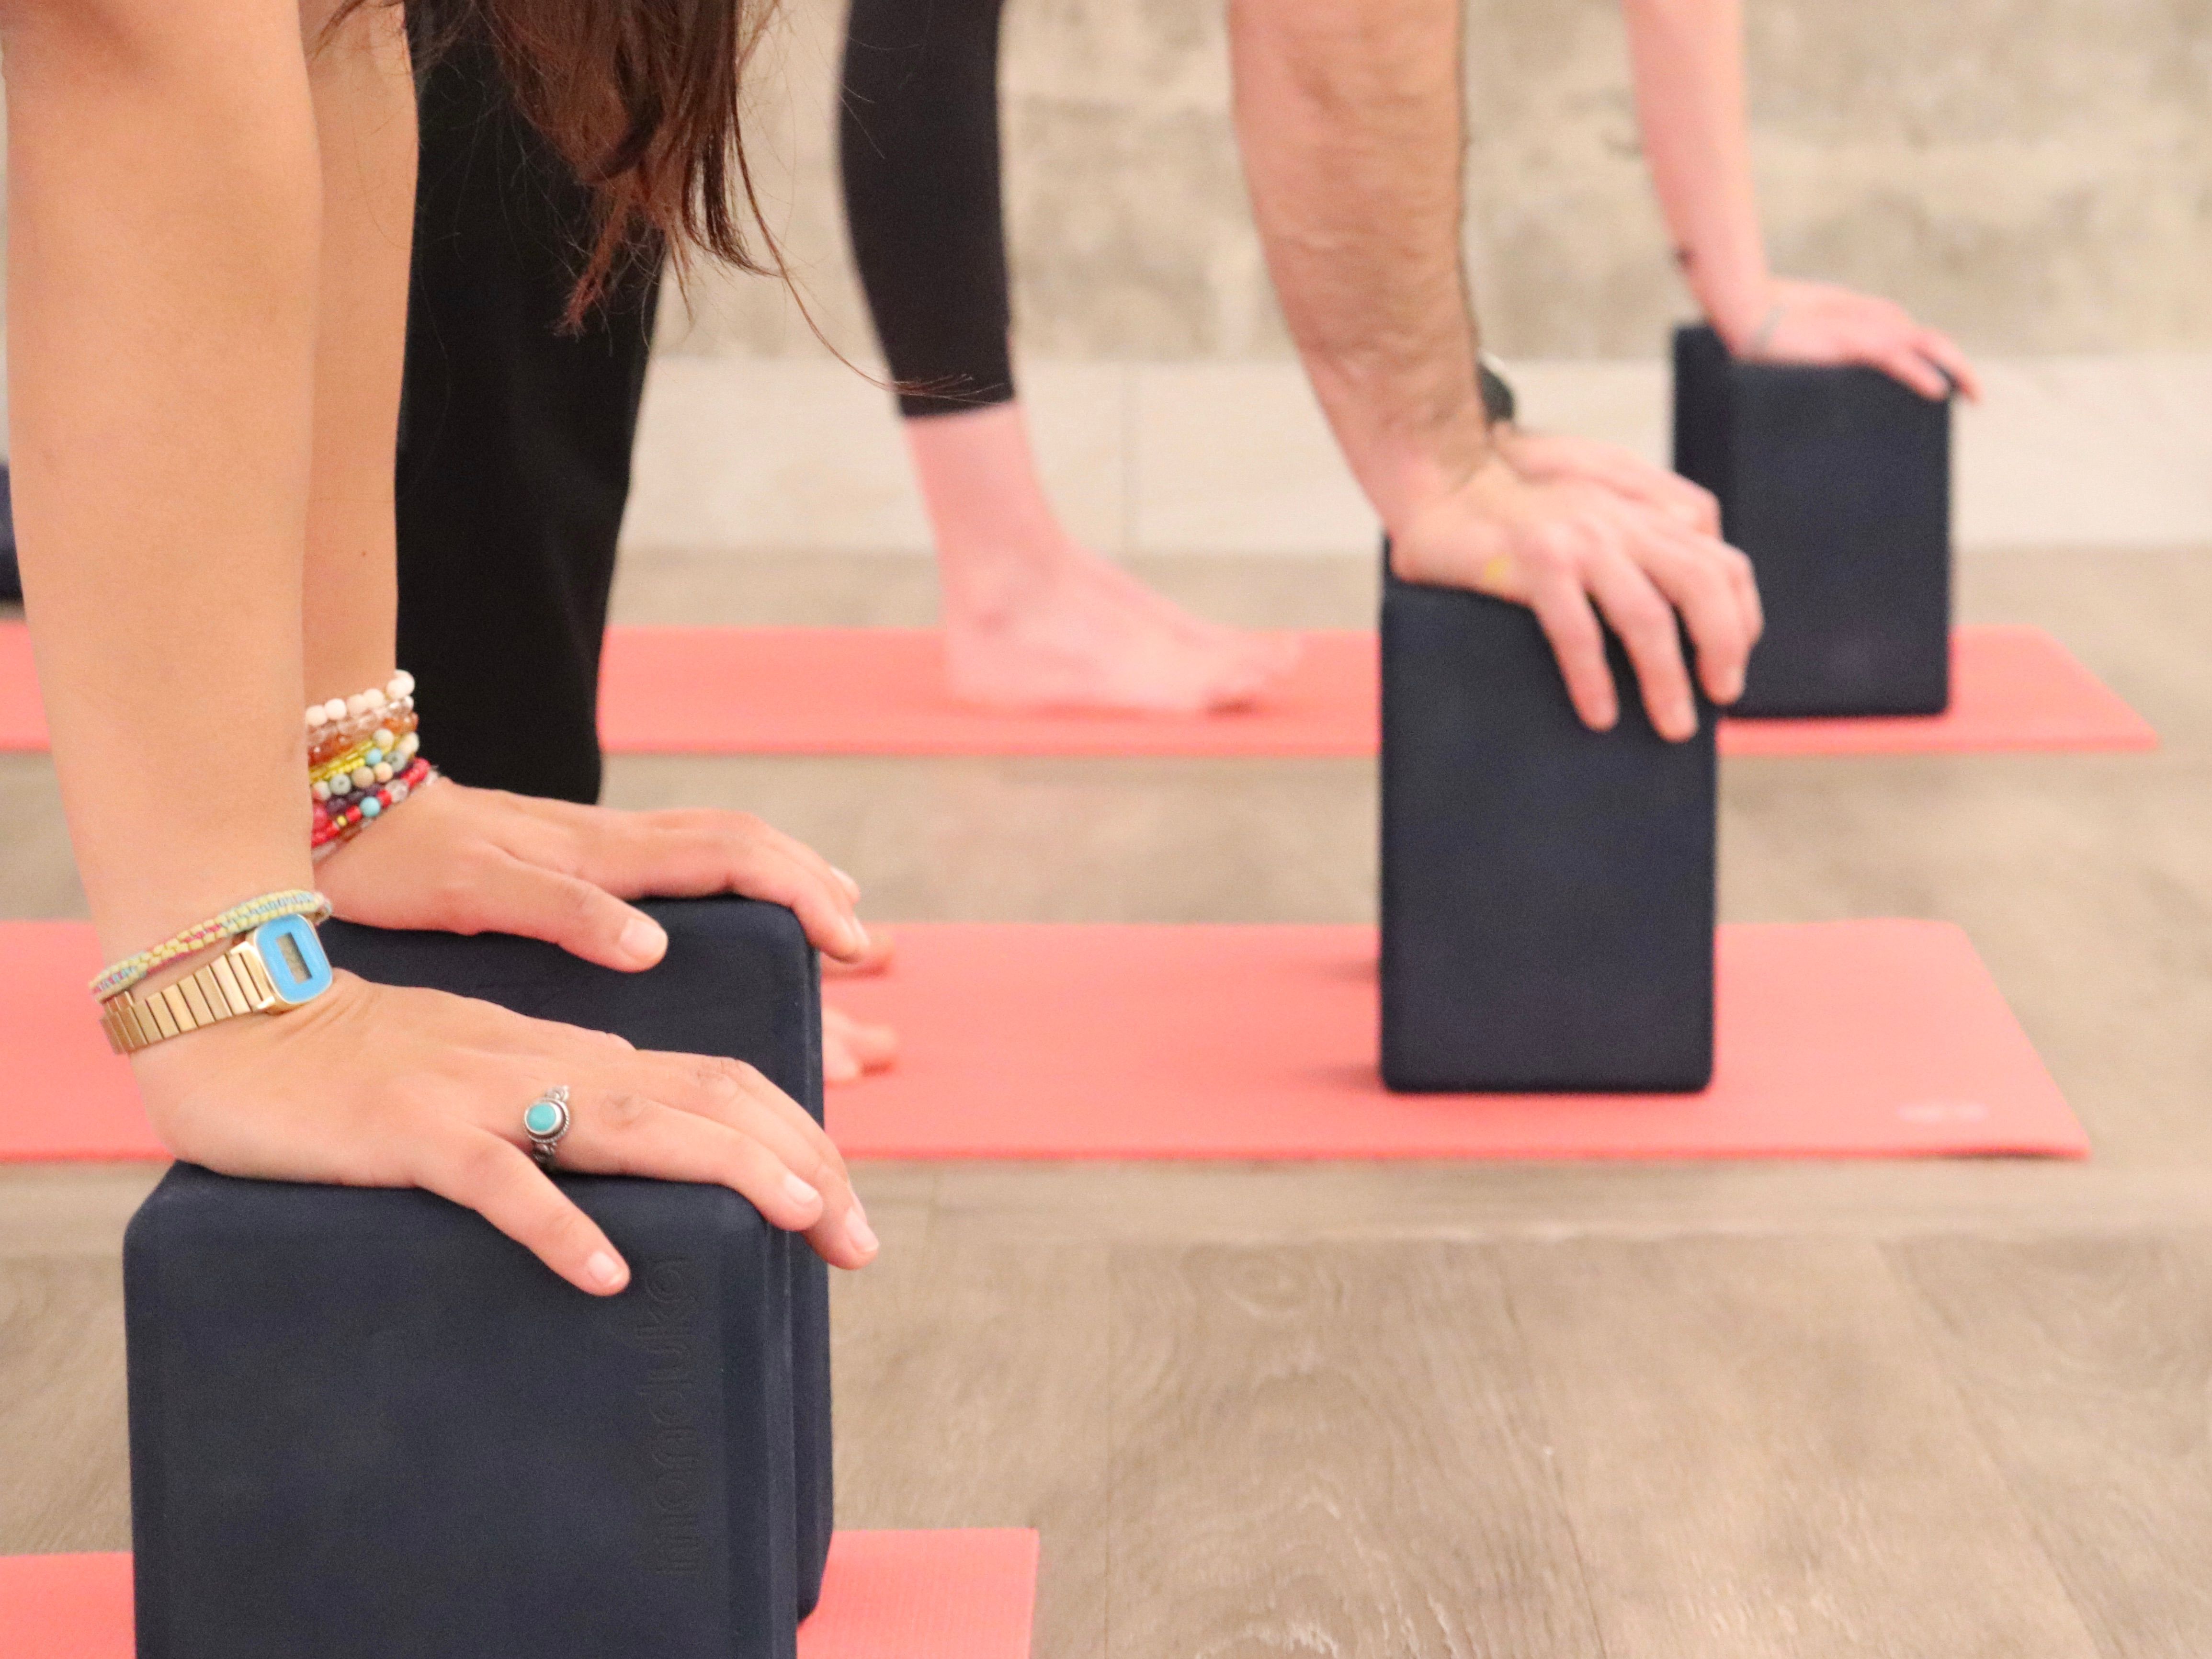 Hands on yoga blocks